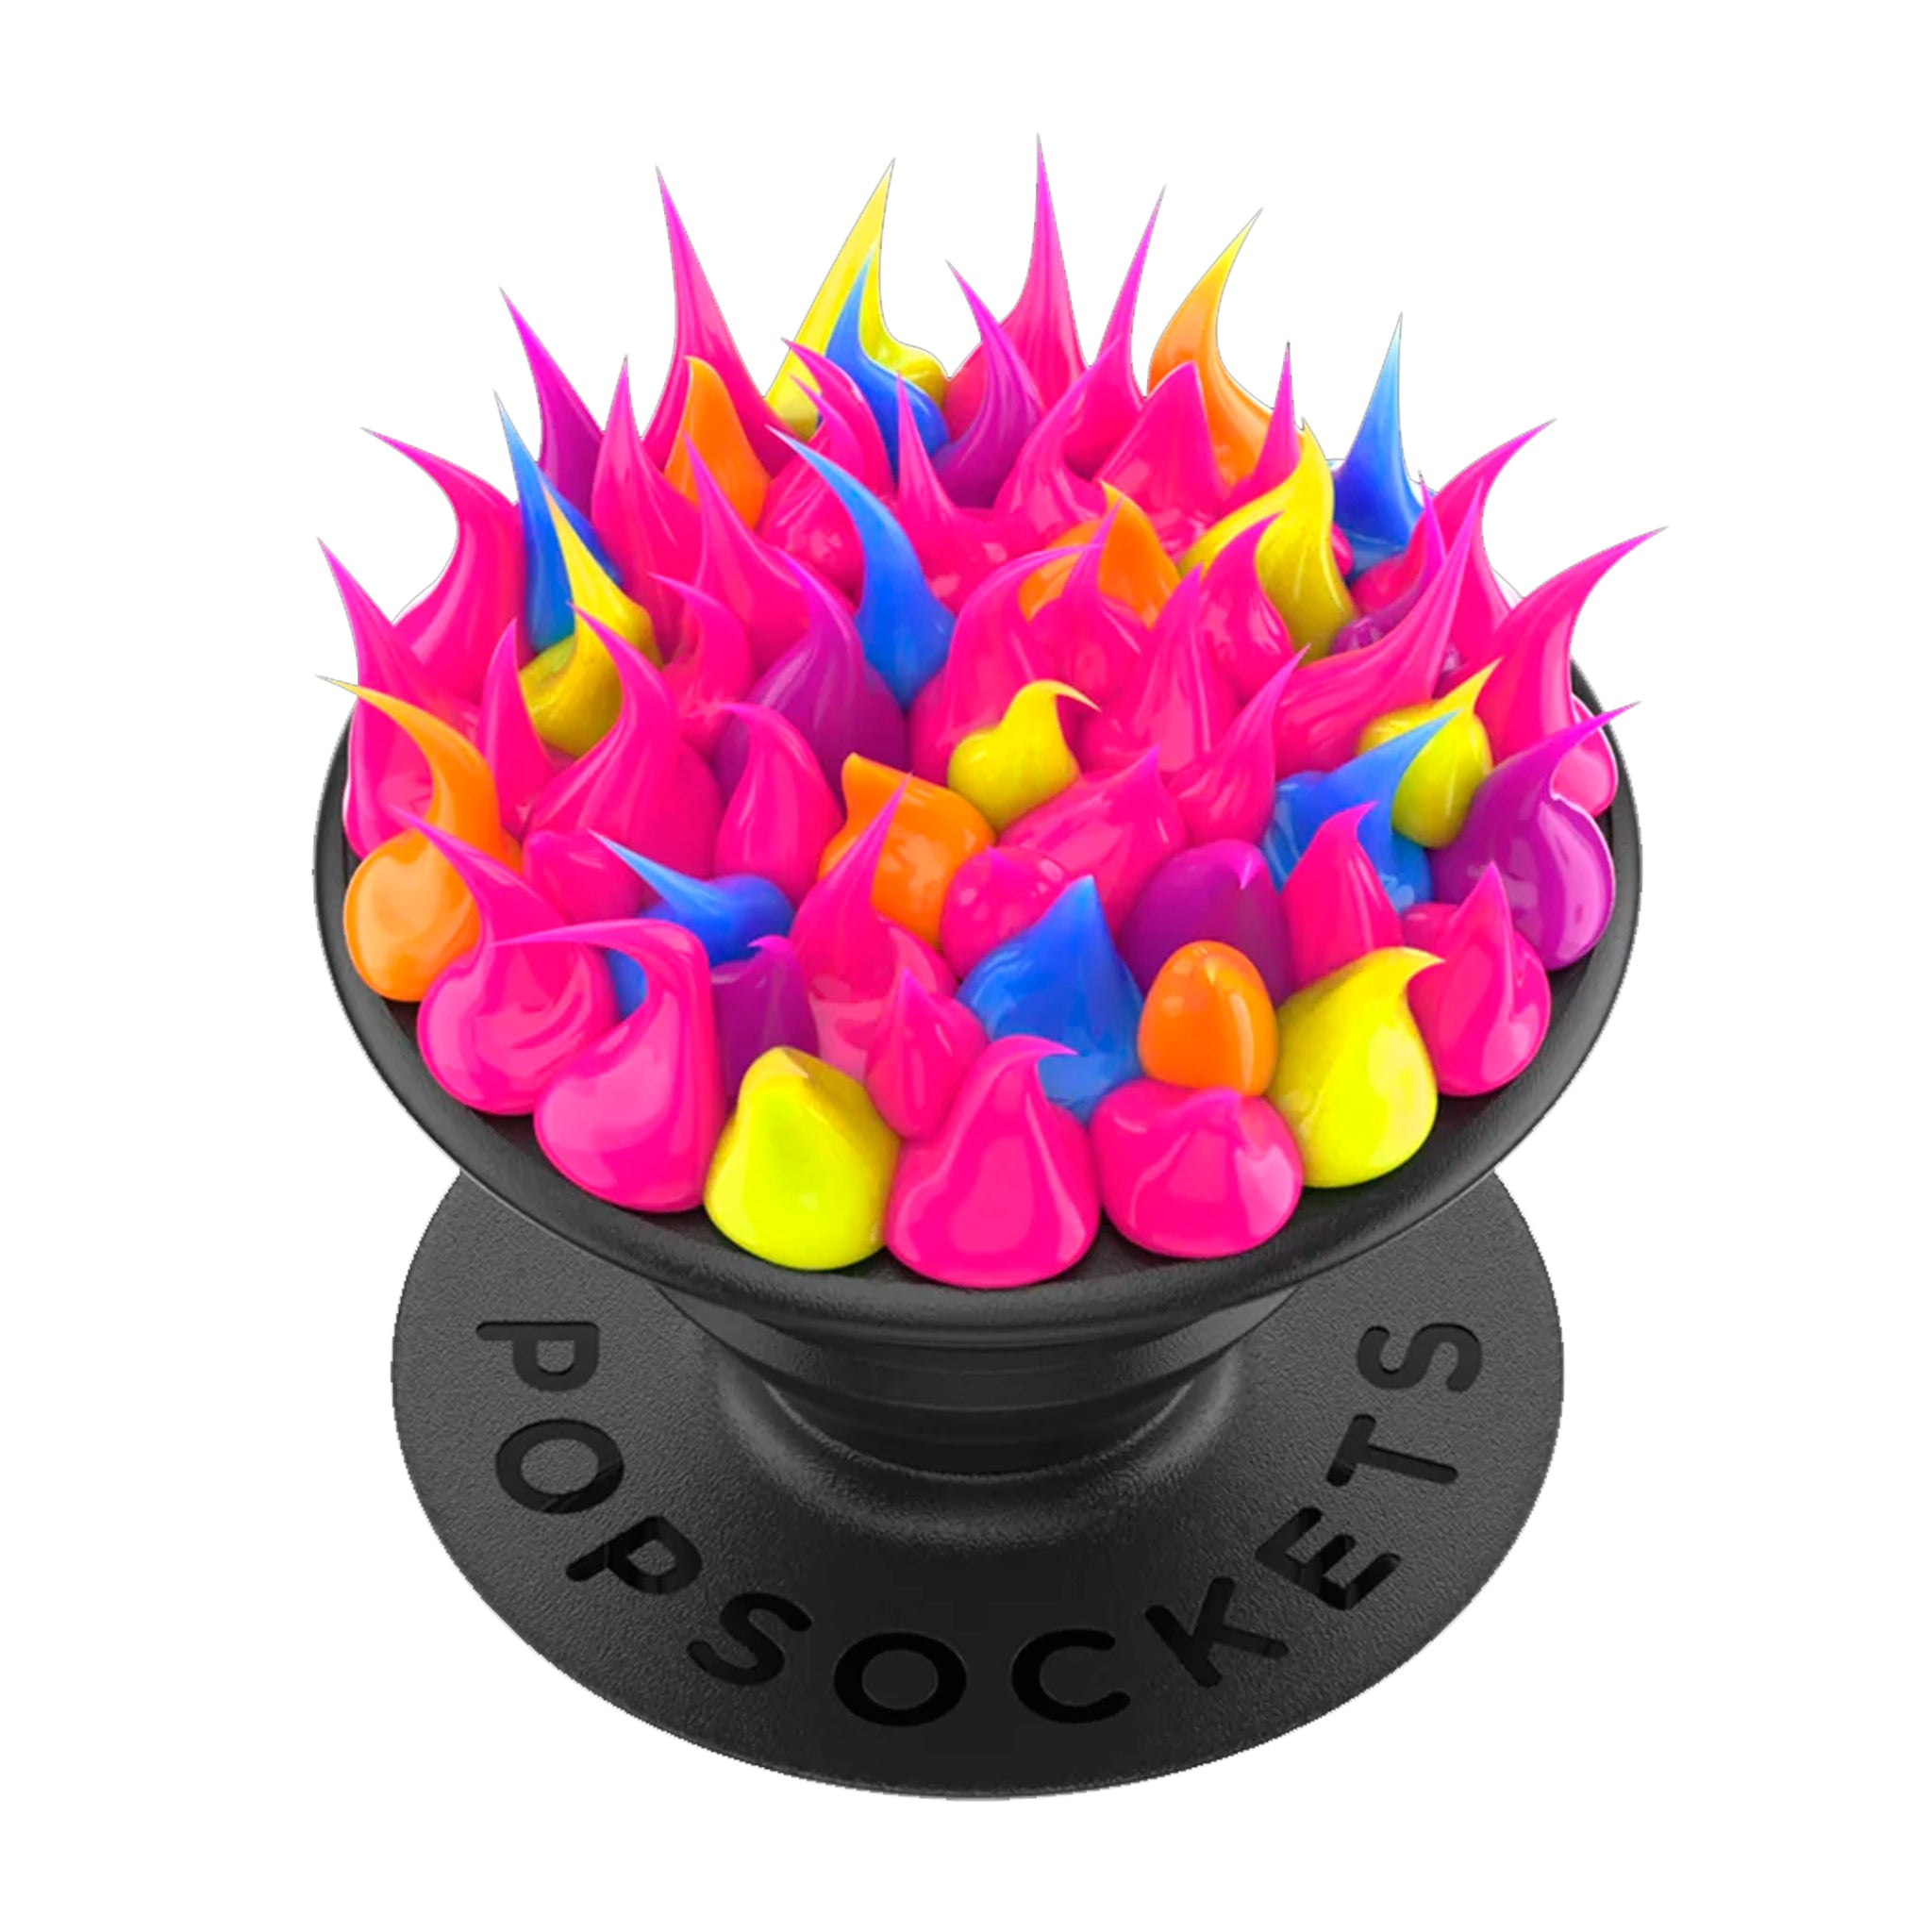 Popsockets - Popgrip Premium - Spiky Pink Acid